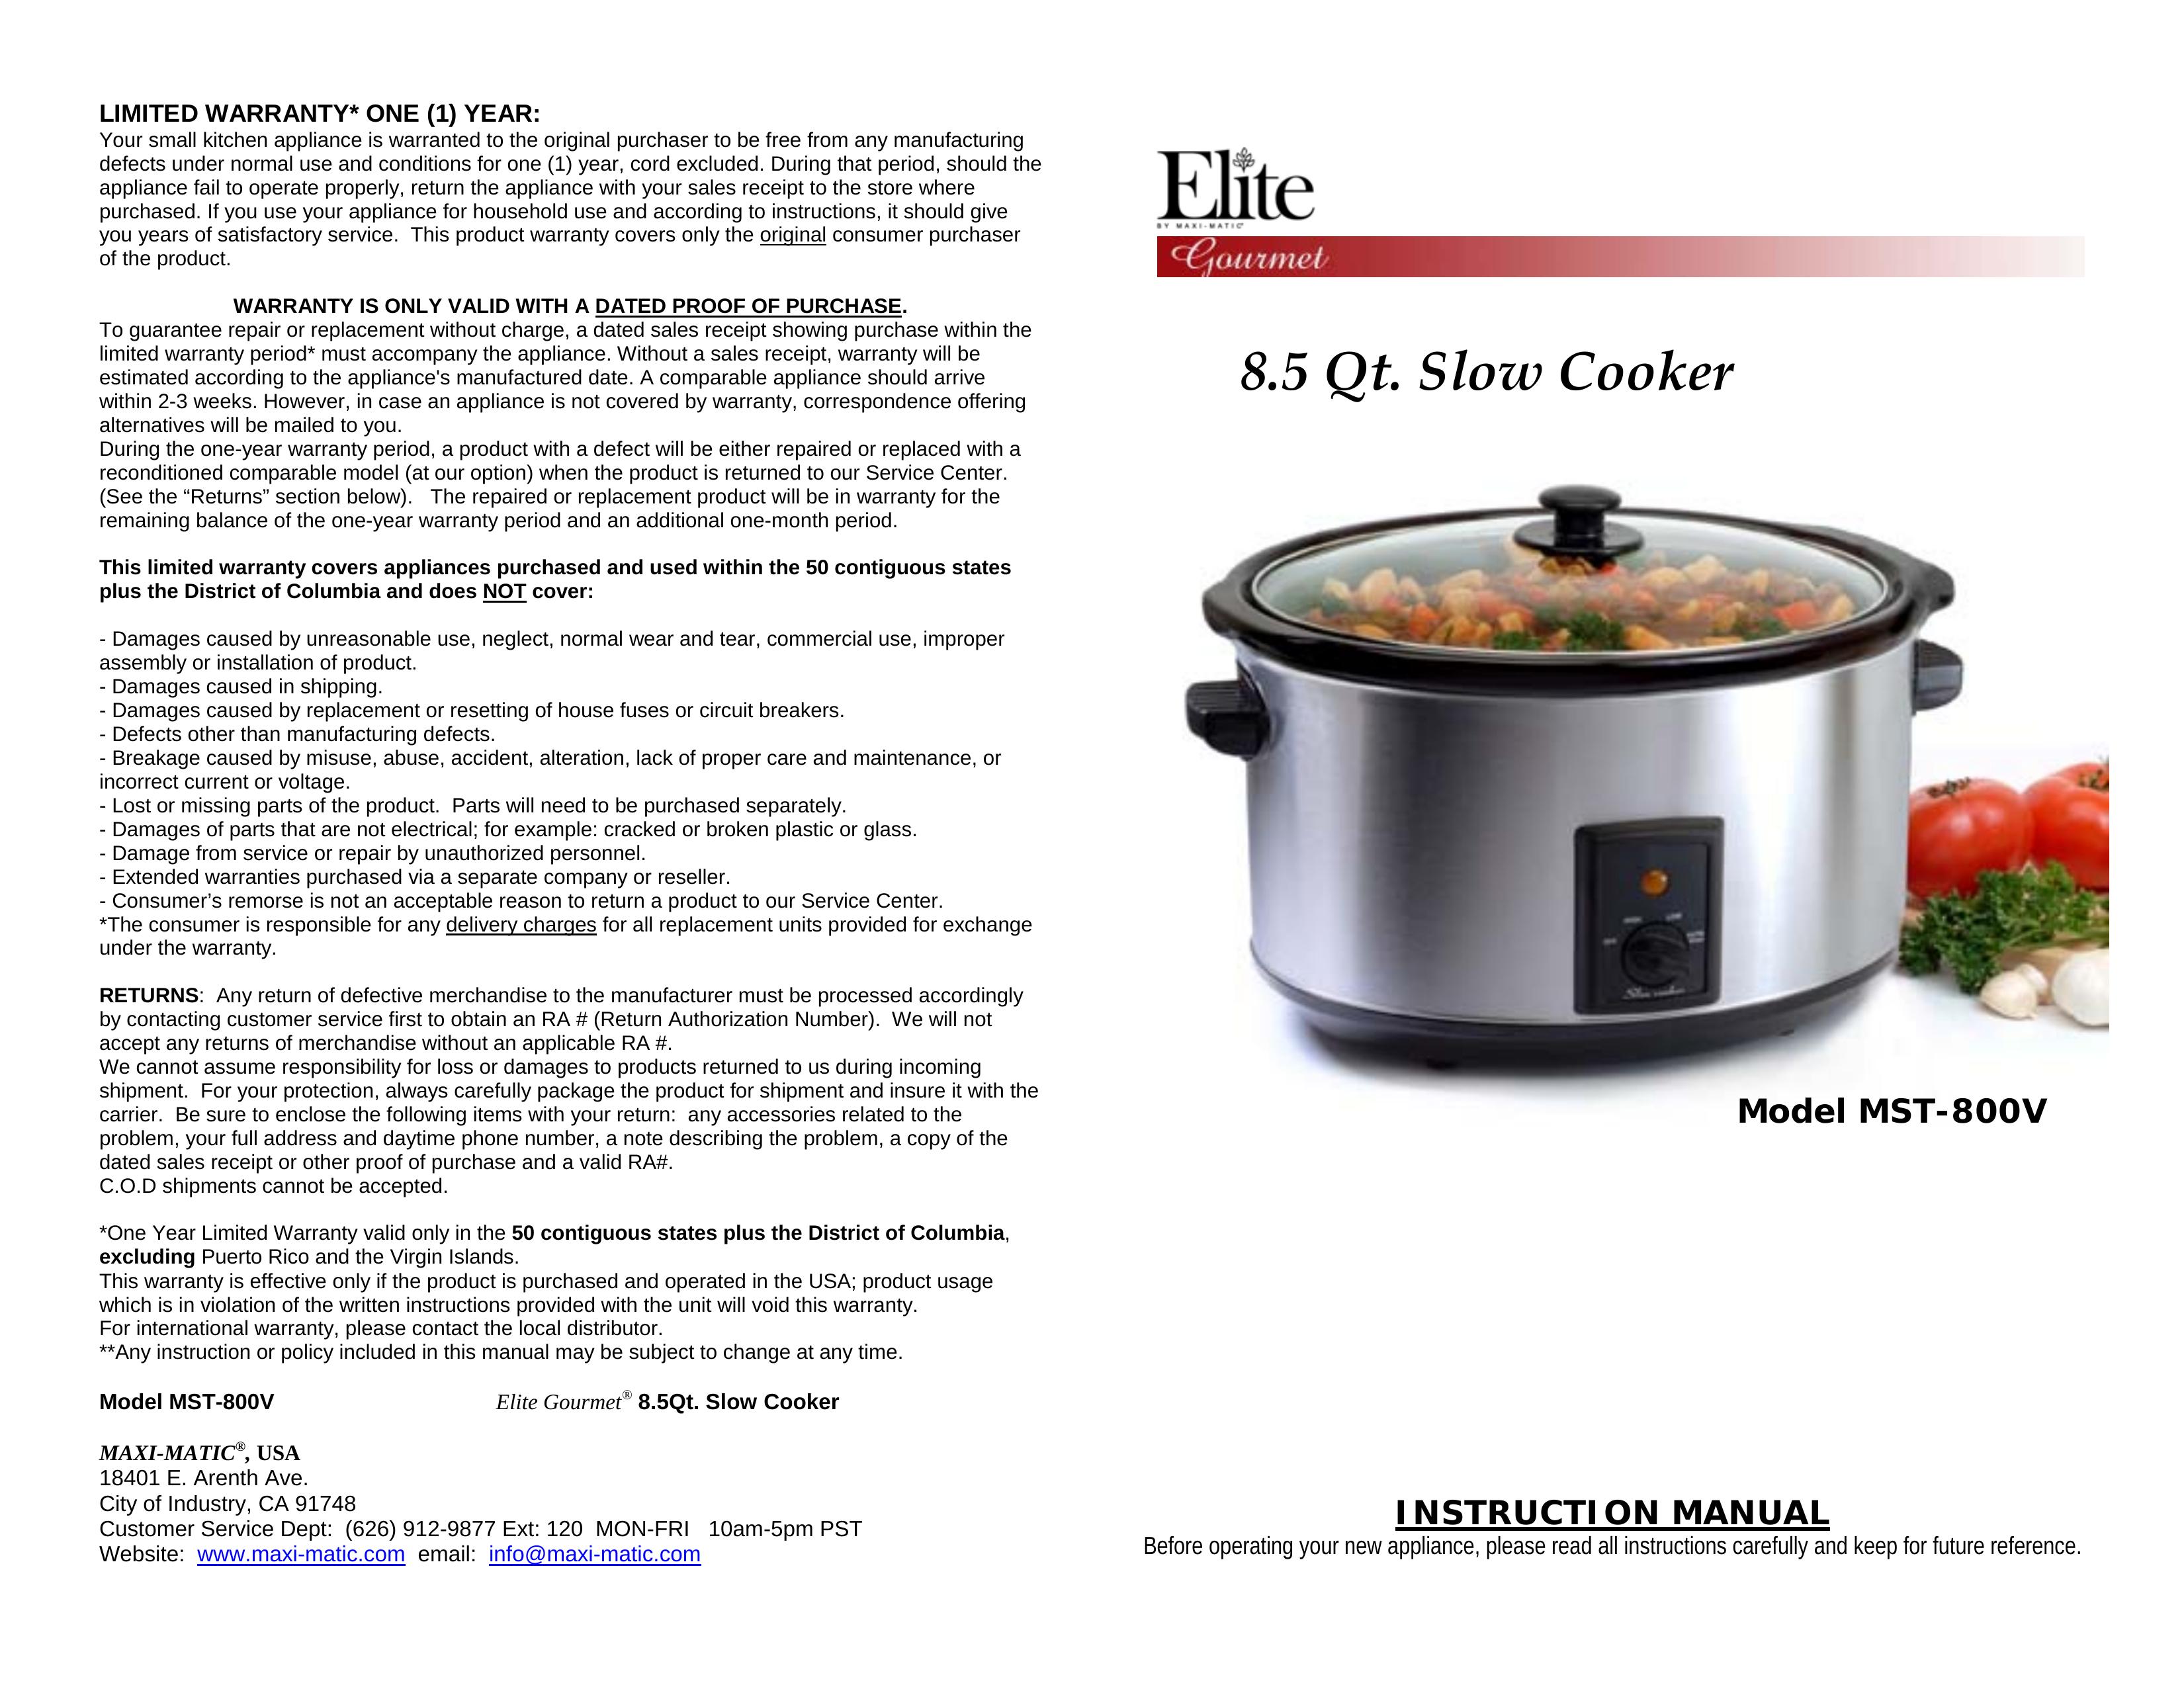 Maximatic MST-800V Slow Cooker User Manual